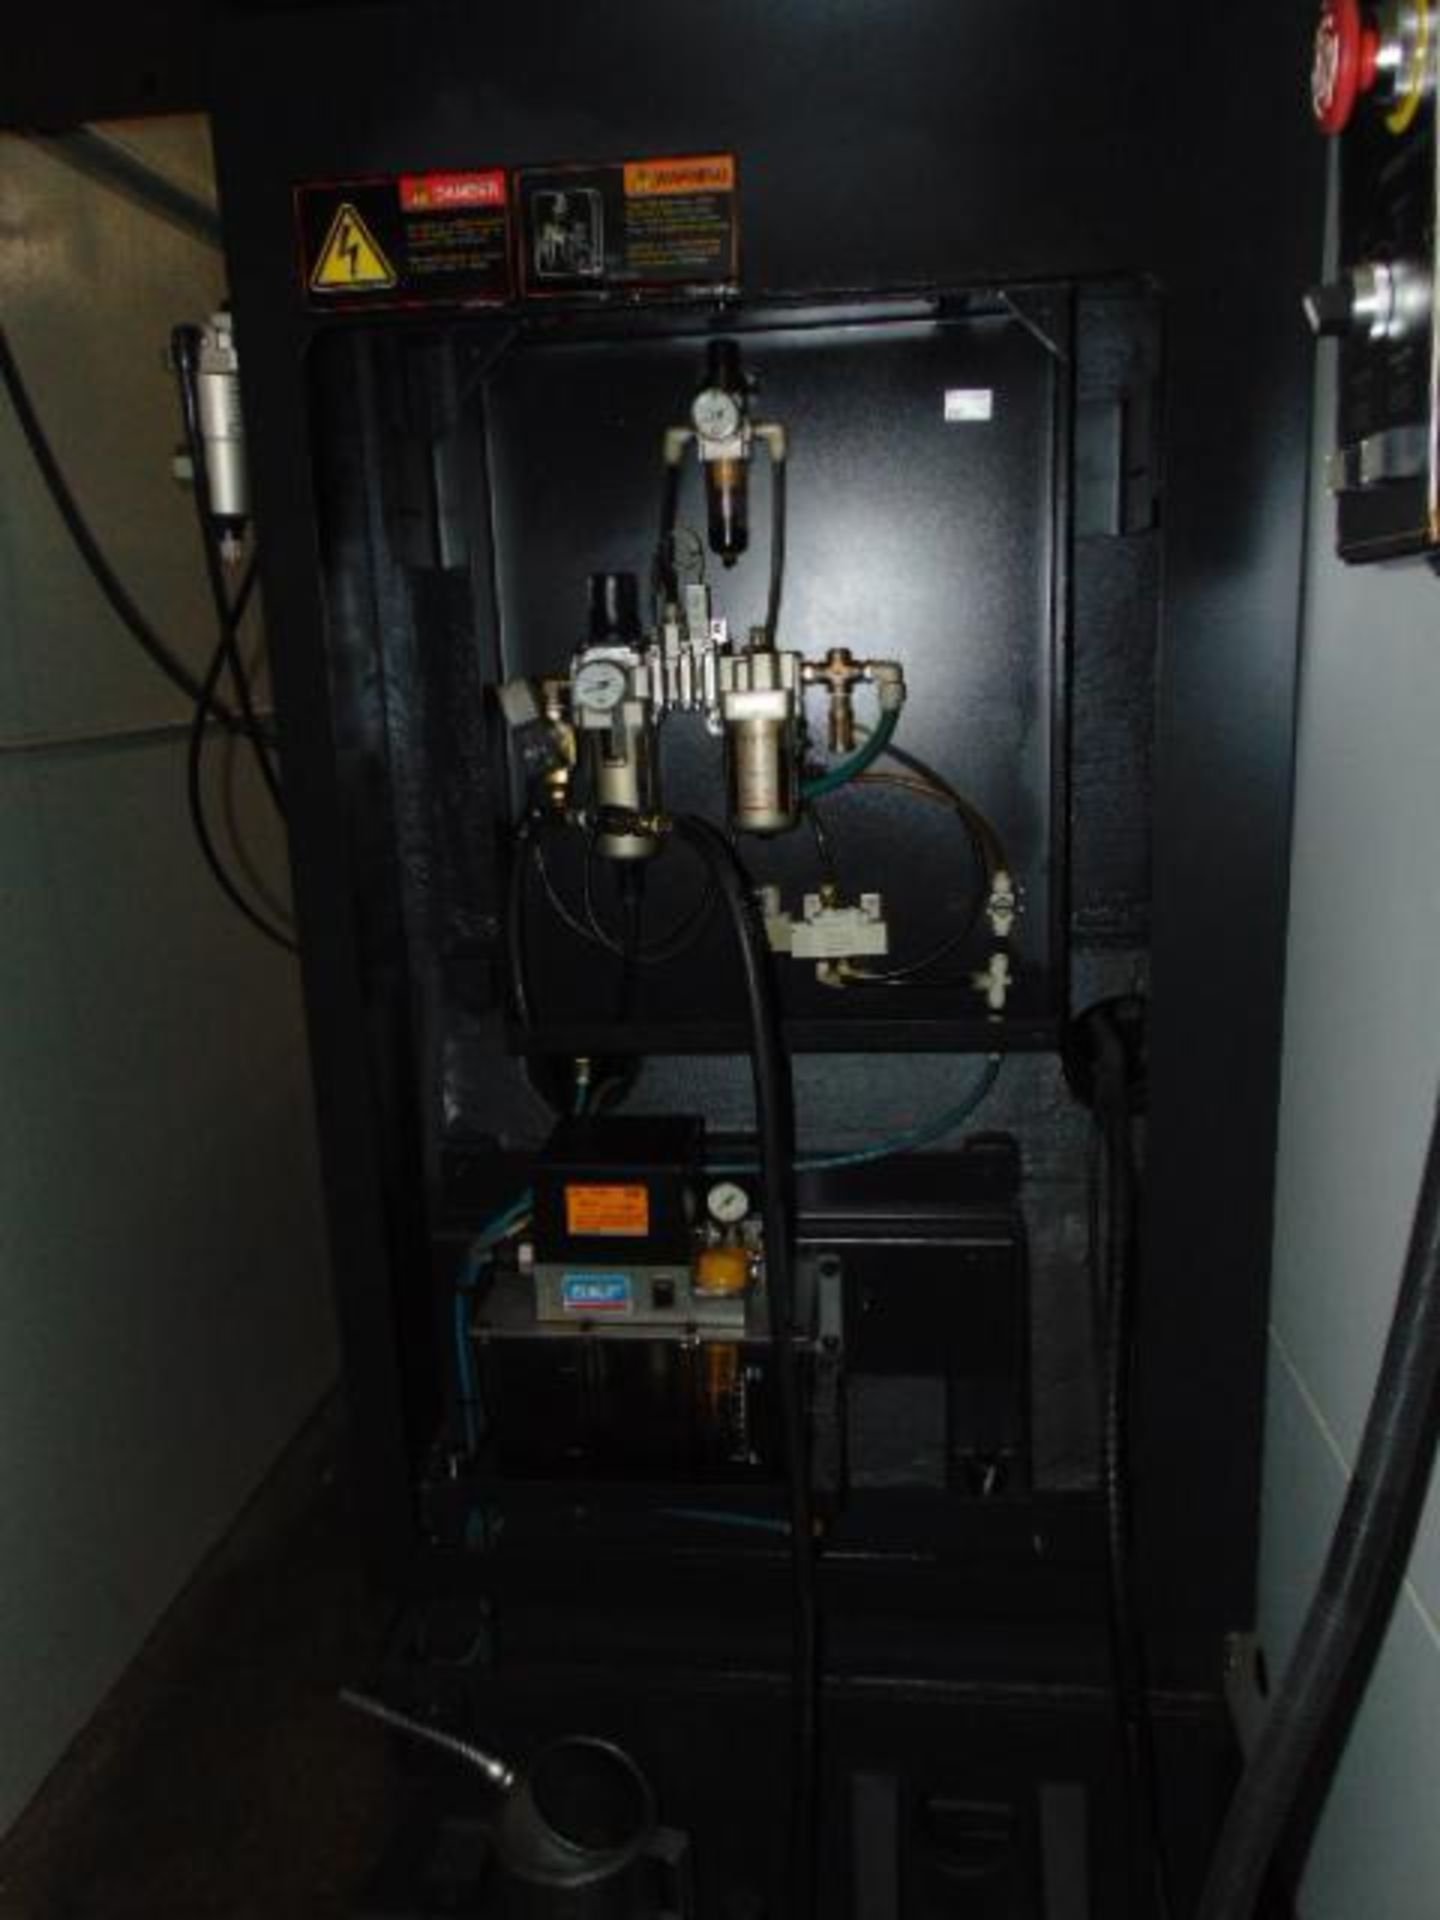 4-AXIS VERTICAL MACHINING CENTER, DOOSAN MDL. MYNX 7500/50, new 4/2012, Fanuc 31i CNC, 29.5" x 63" t - Image 11 of 21